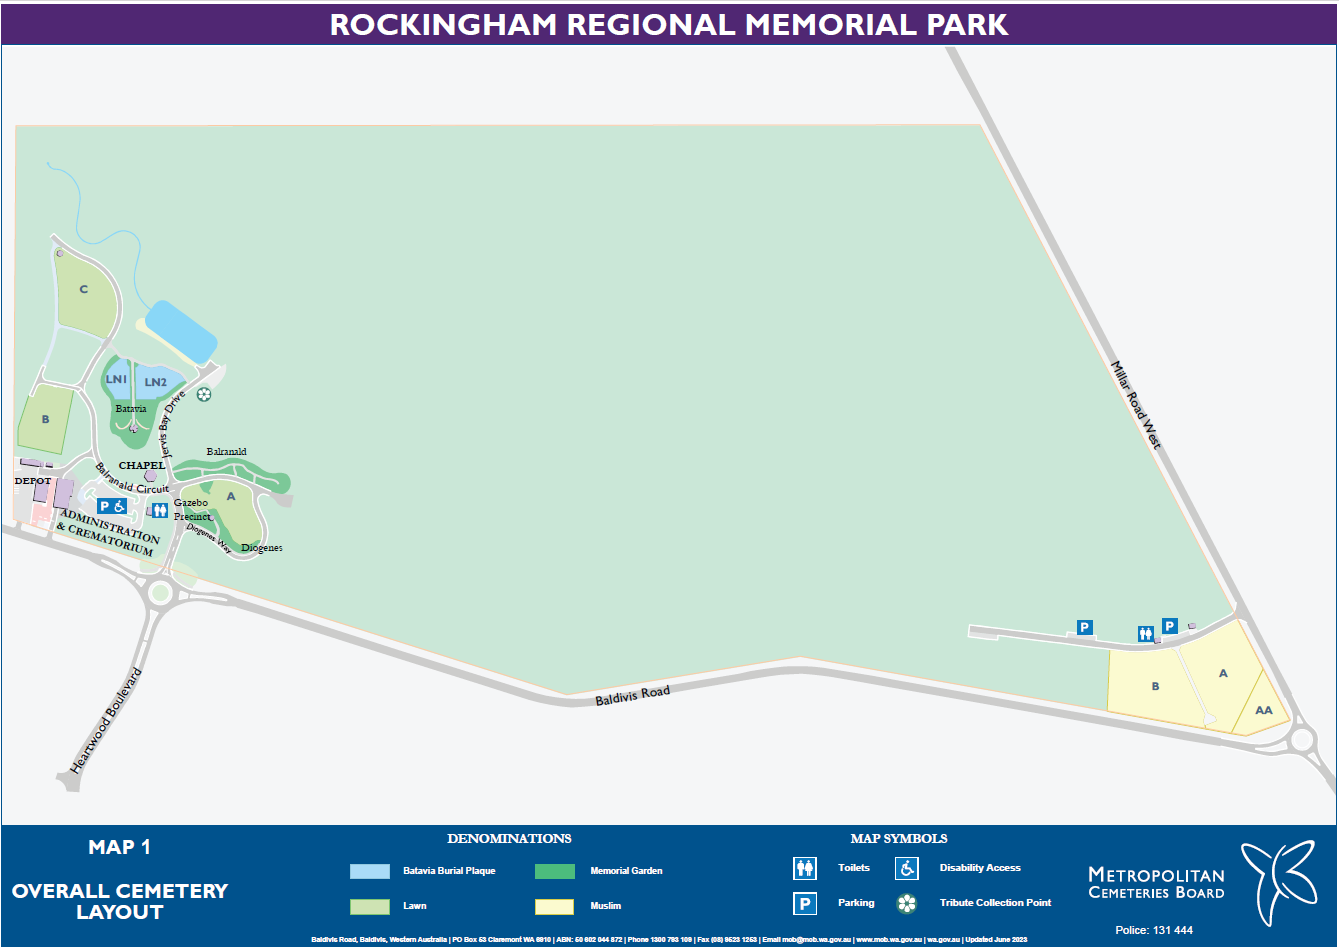 Rockingham Regional Memorial Park overall layout map